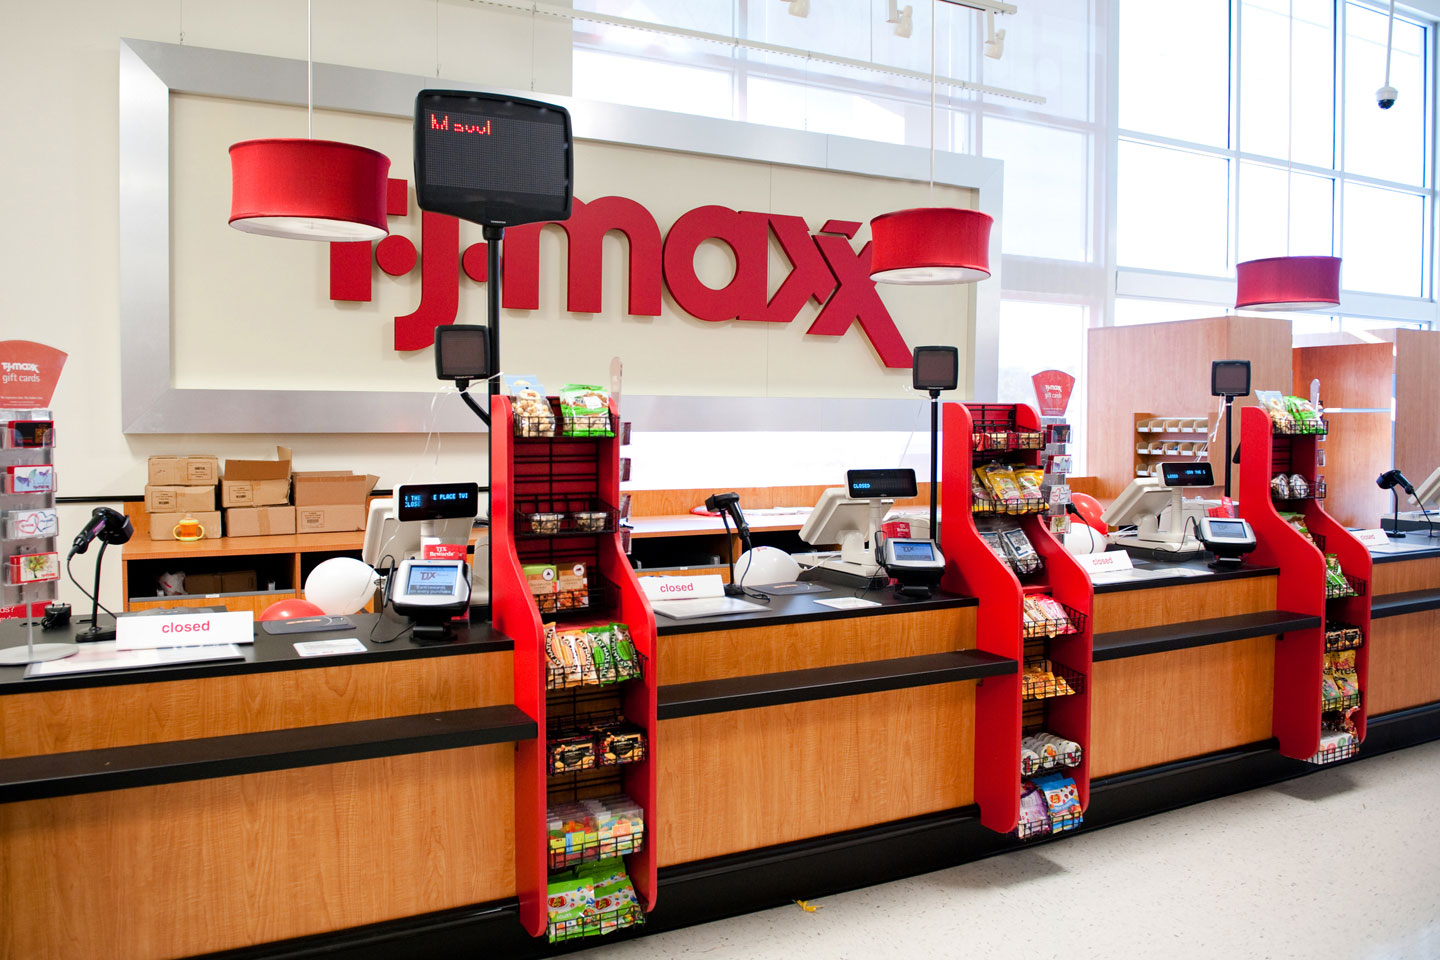 photo of a tj maxx store checkout